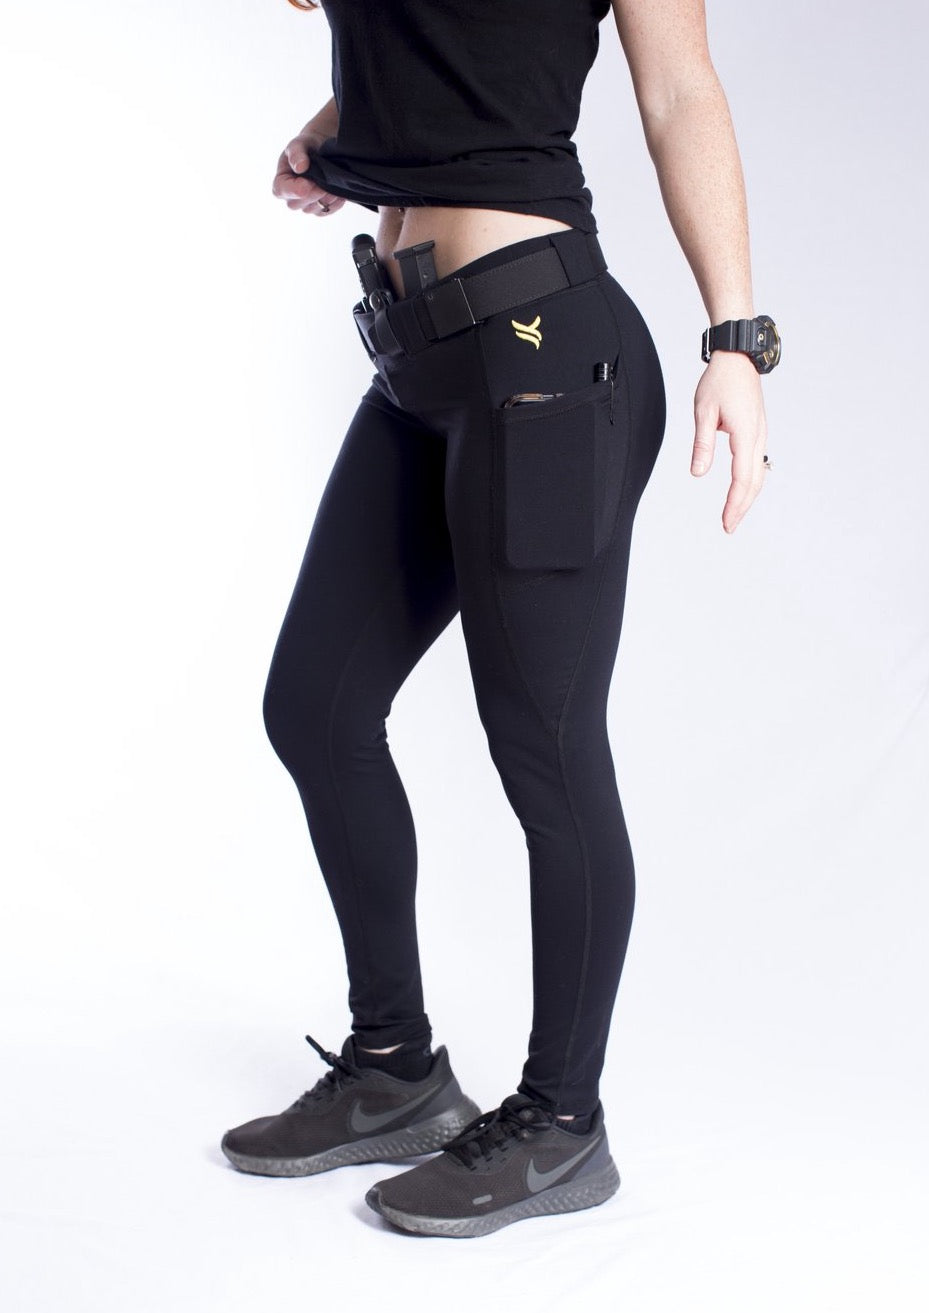 Amazon.com: CORHAD 1 Pair fitness leggings belt for women sports thigh band  exercise belt running leash wrap belts for women slimming belt gym belt leg  sweat bands Miss undershirt adjustable Neoprene Black :